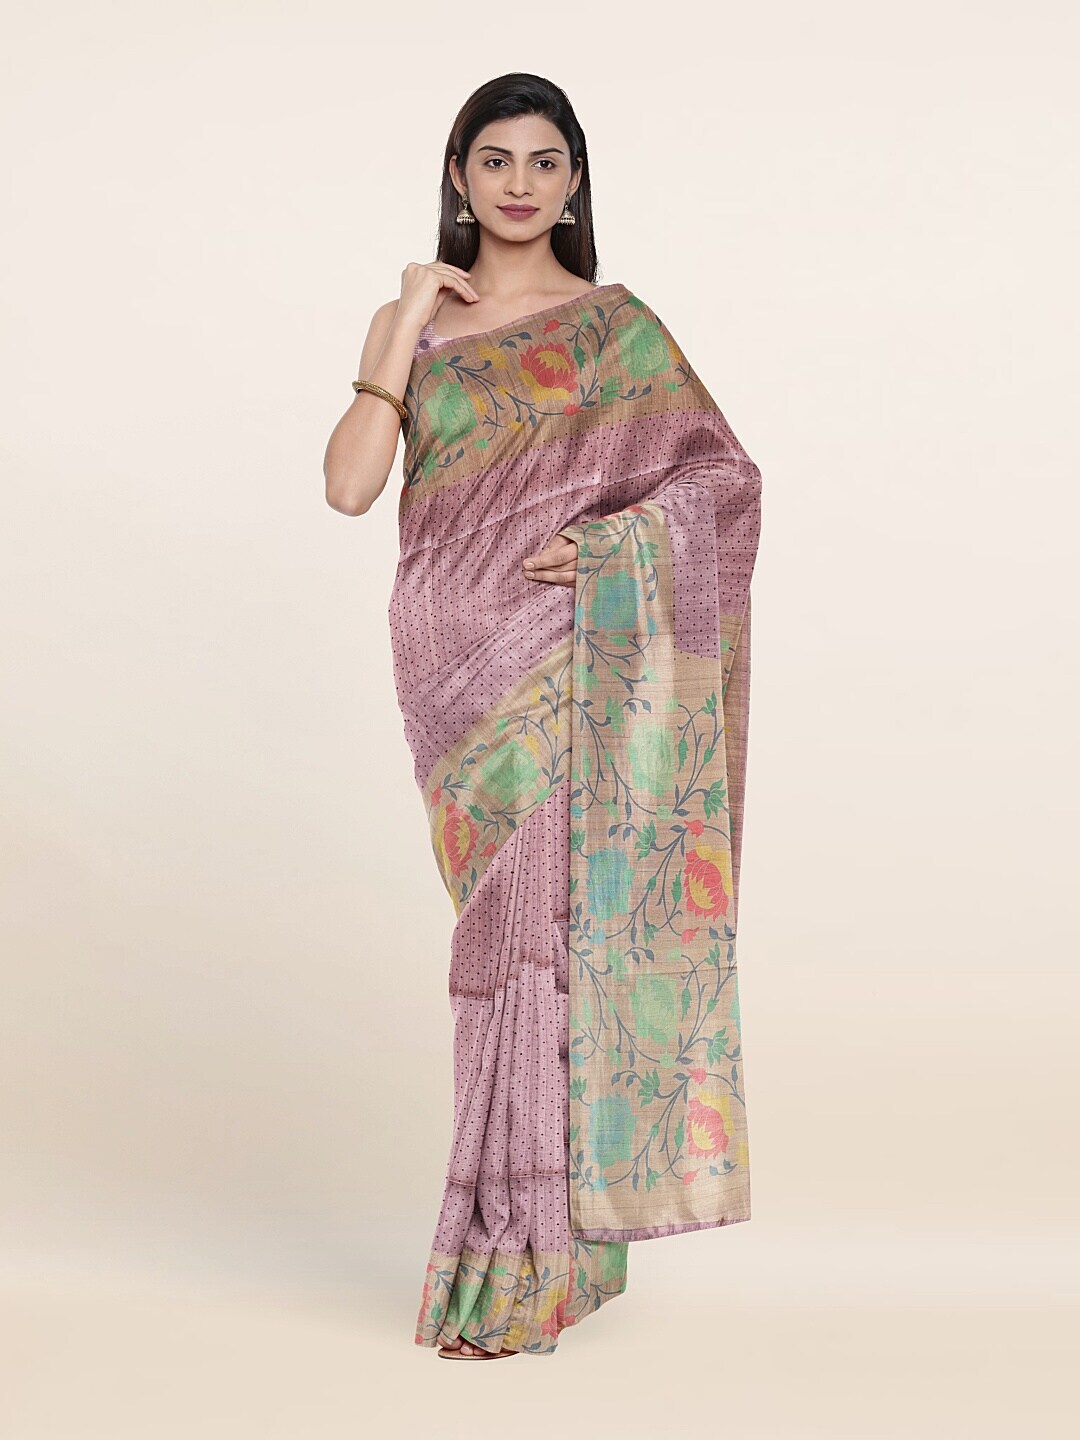 Pothys Lavender & Green Floral Printed Art Silk Saree Price in India